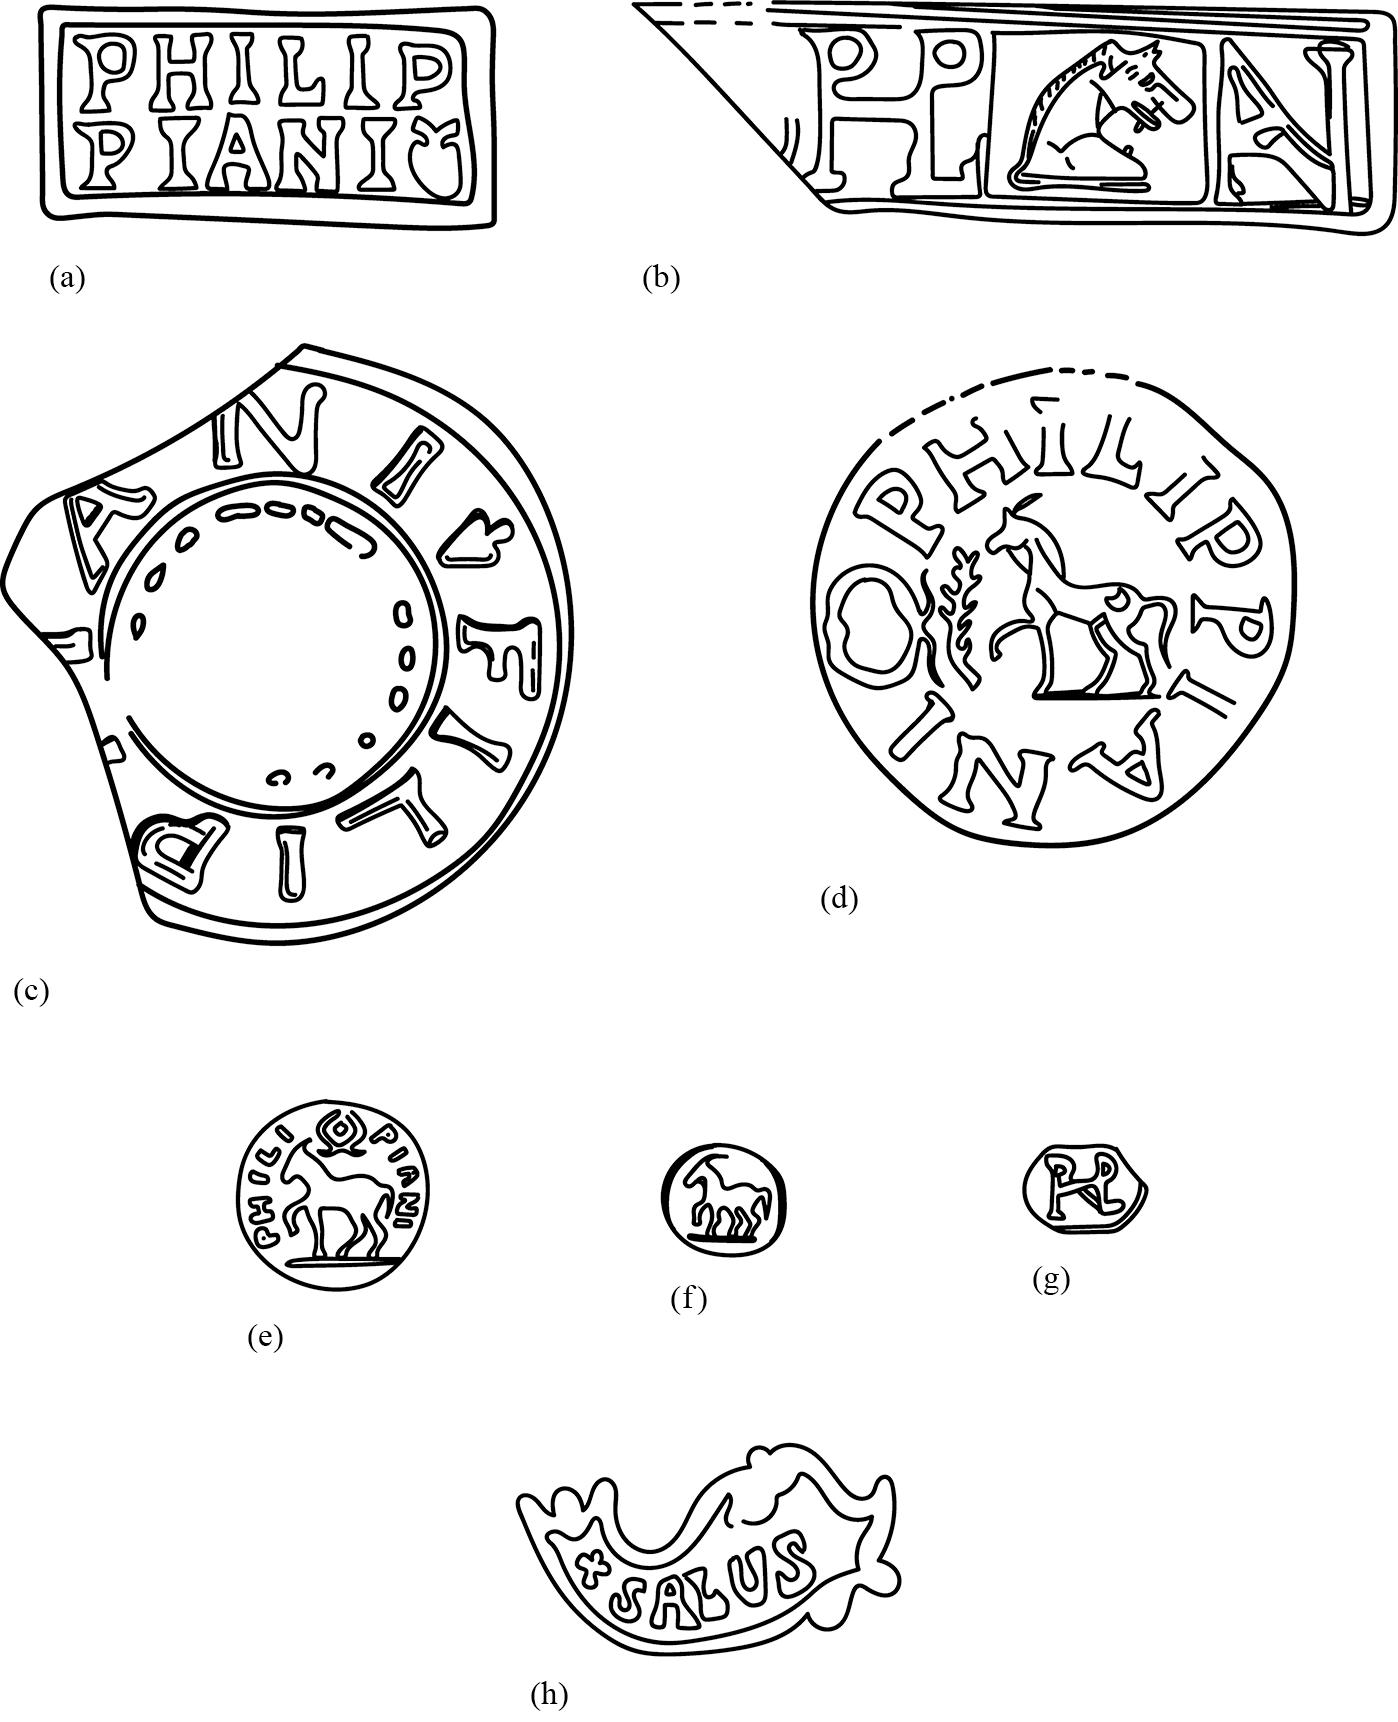 The Signaculum LXXIX Roman Bread Stamp